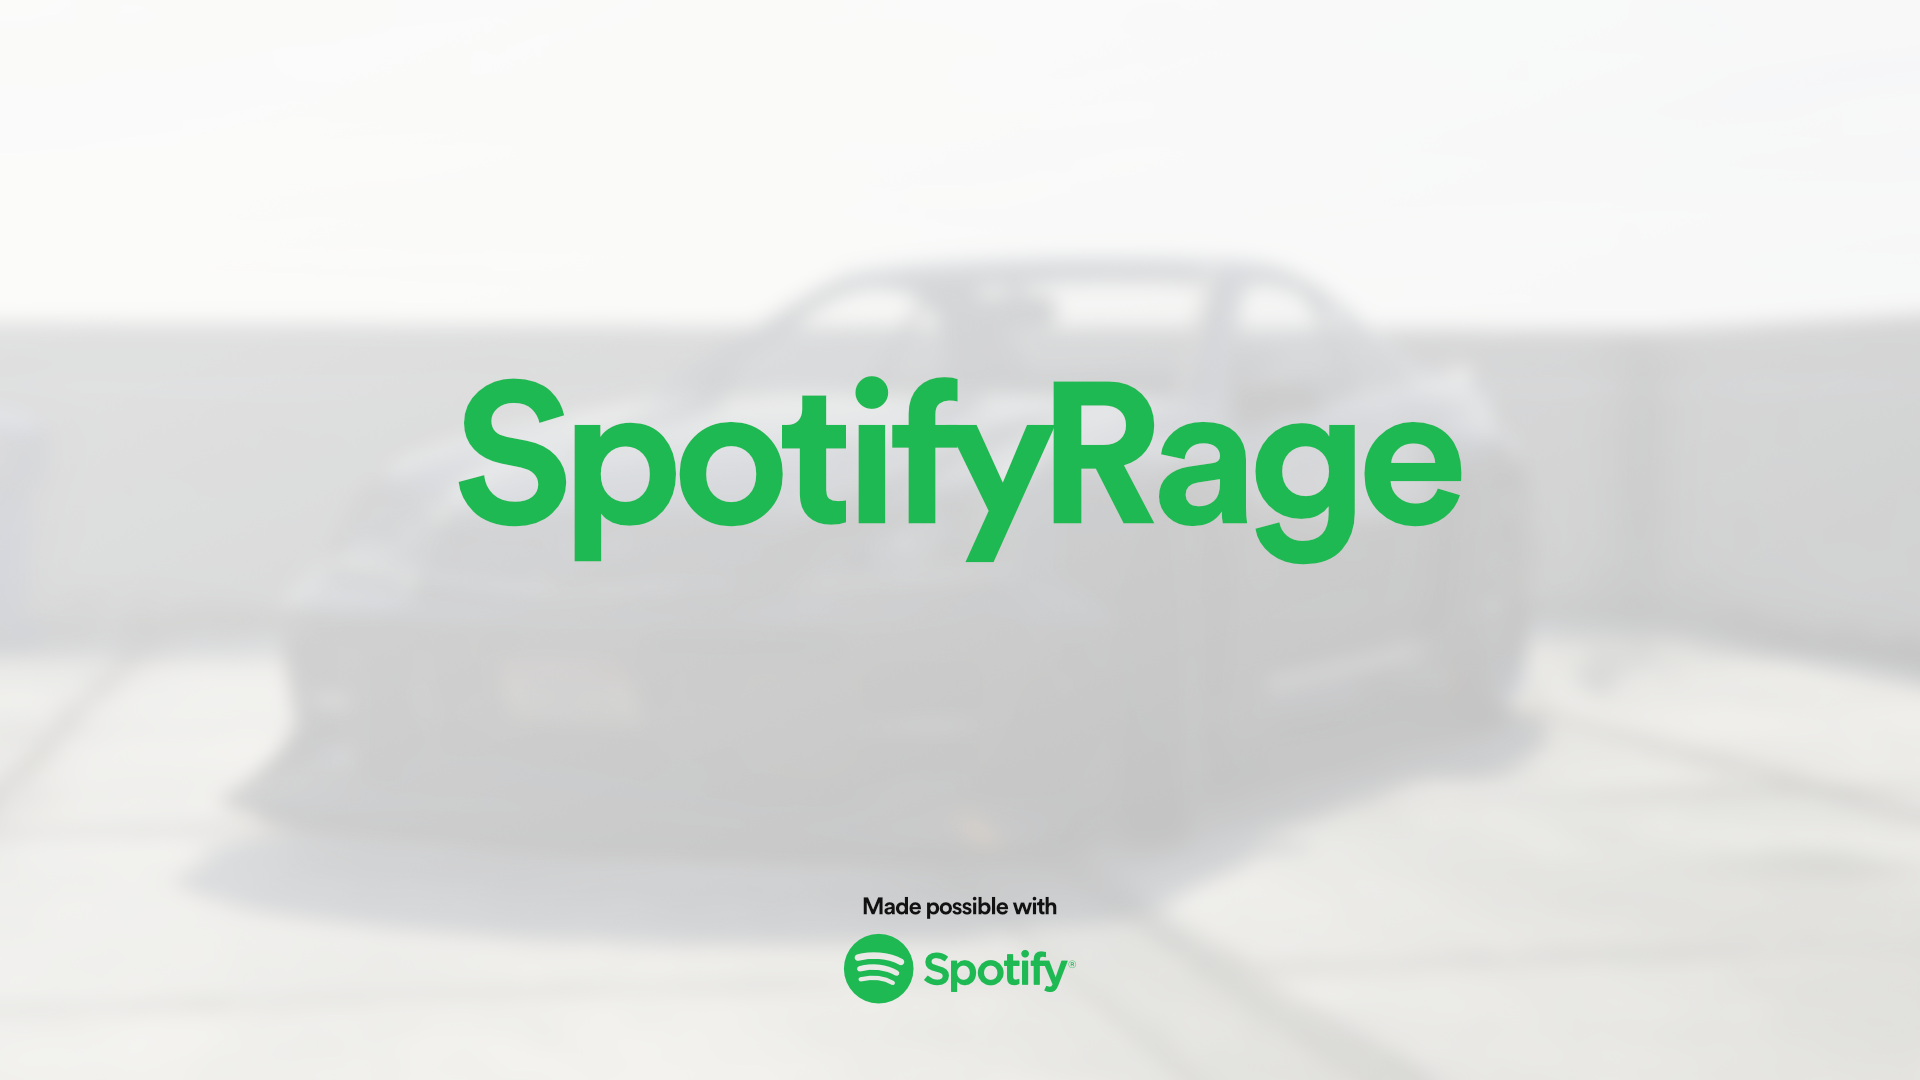 SpotifyRage [.NET]